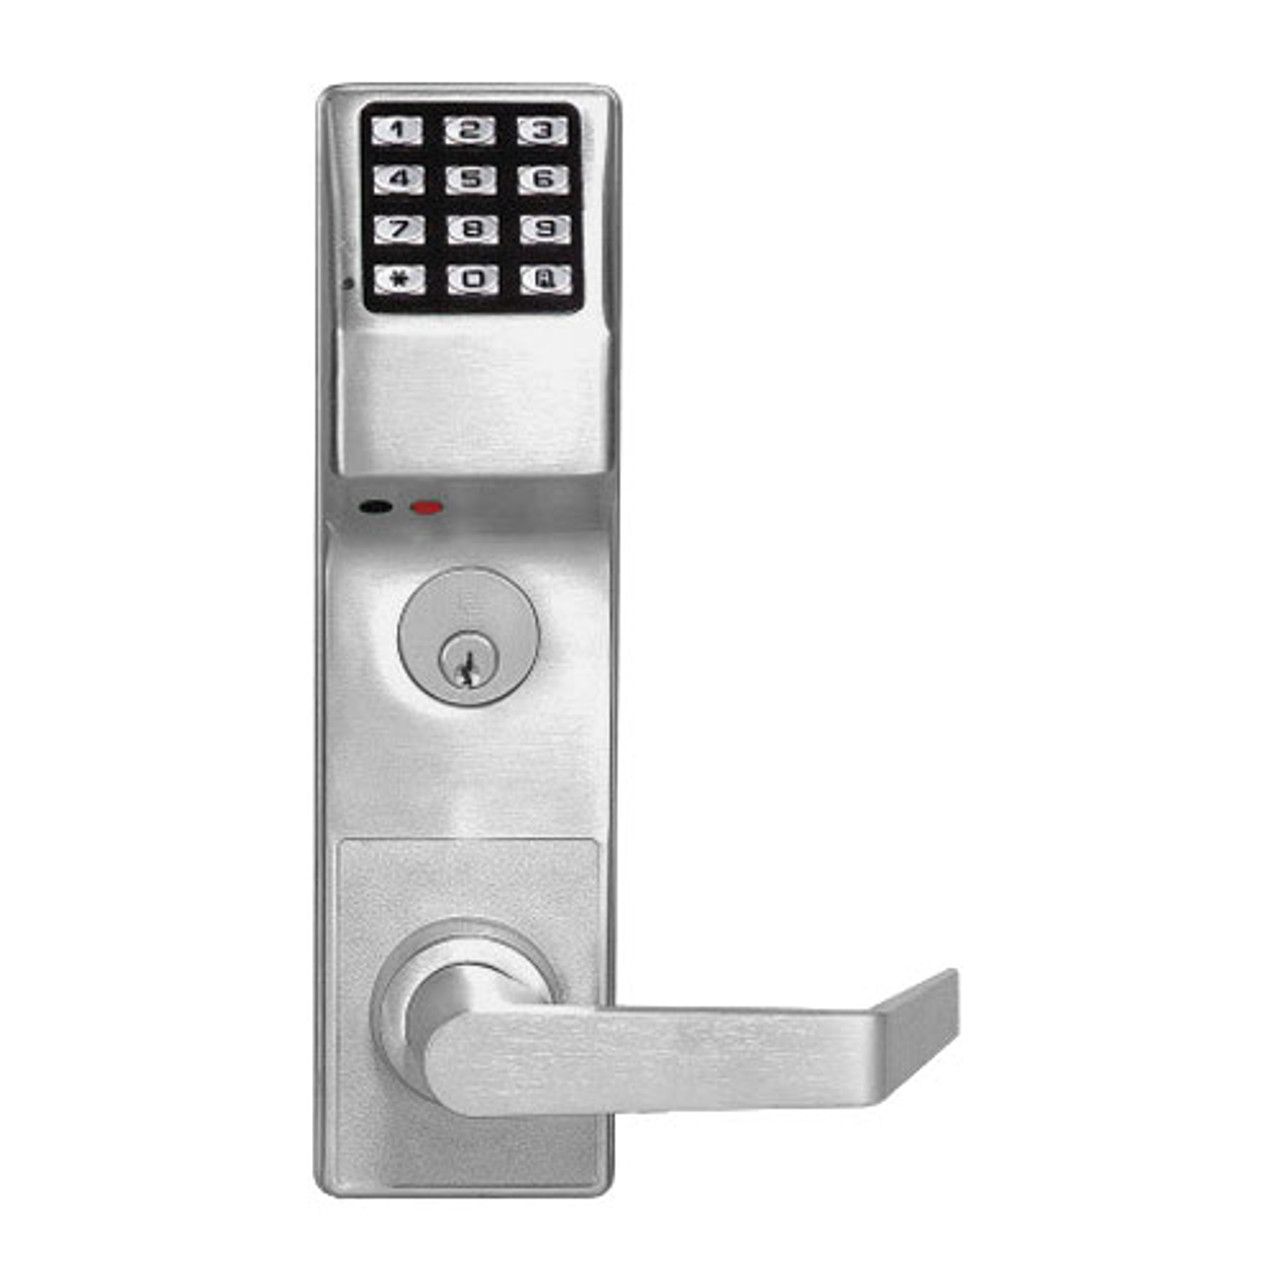 DL4500DBL-US26D Alarm Lock Trilogy Electronic Digital Lock in Satin Chrome Finish